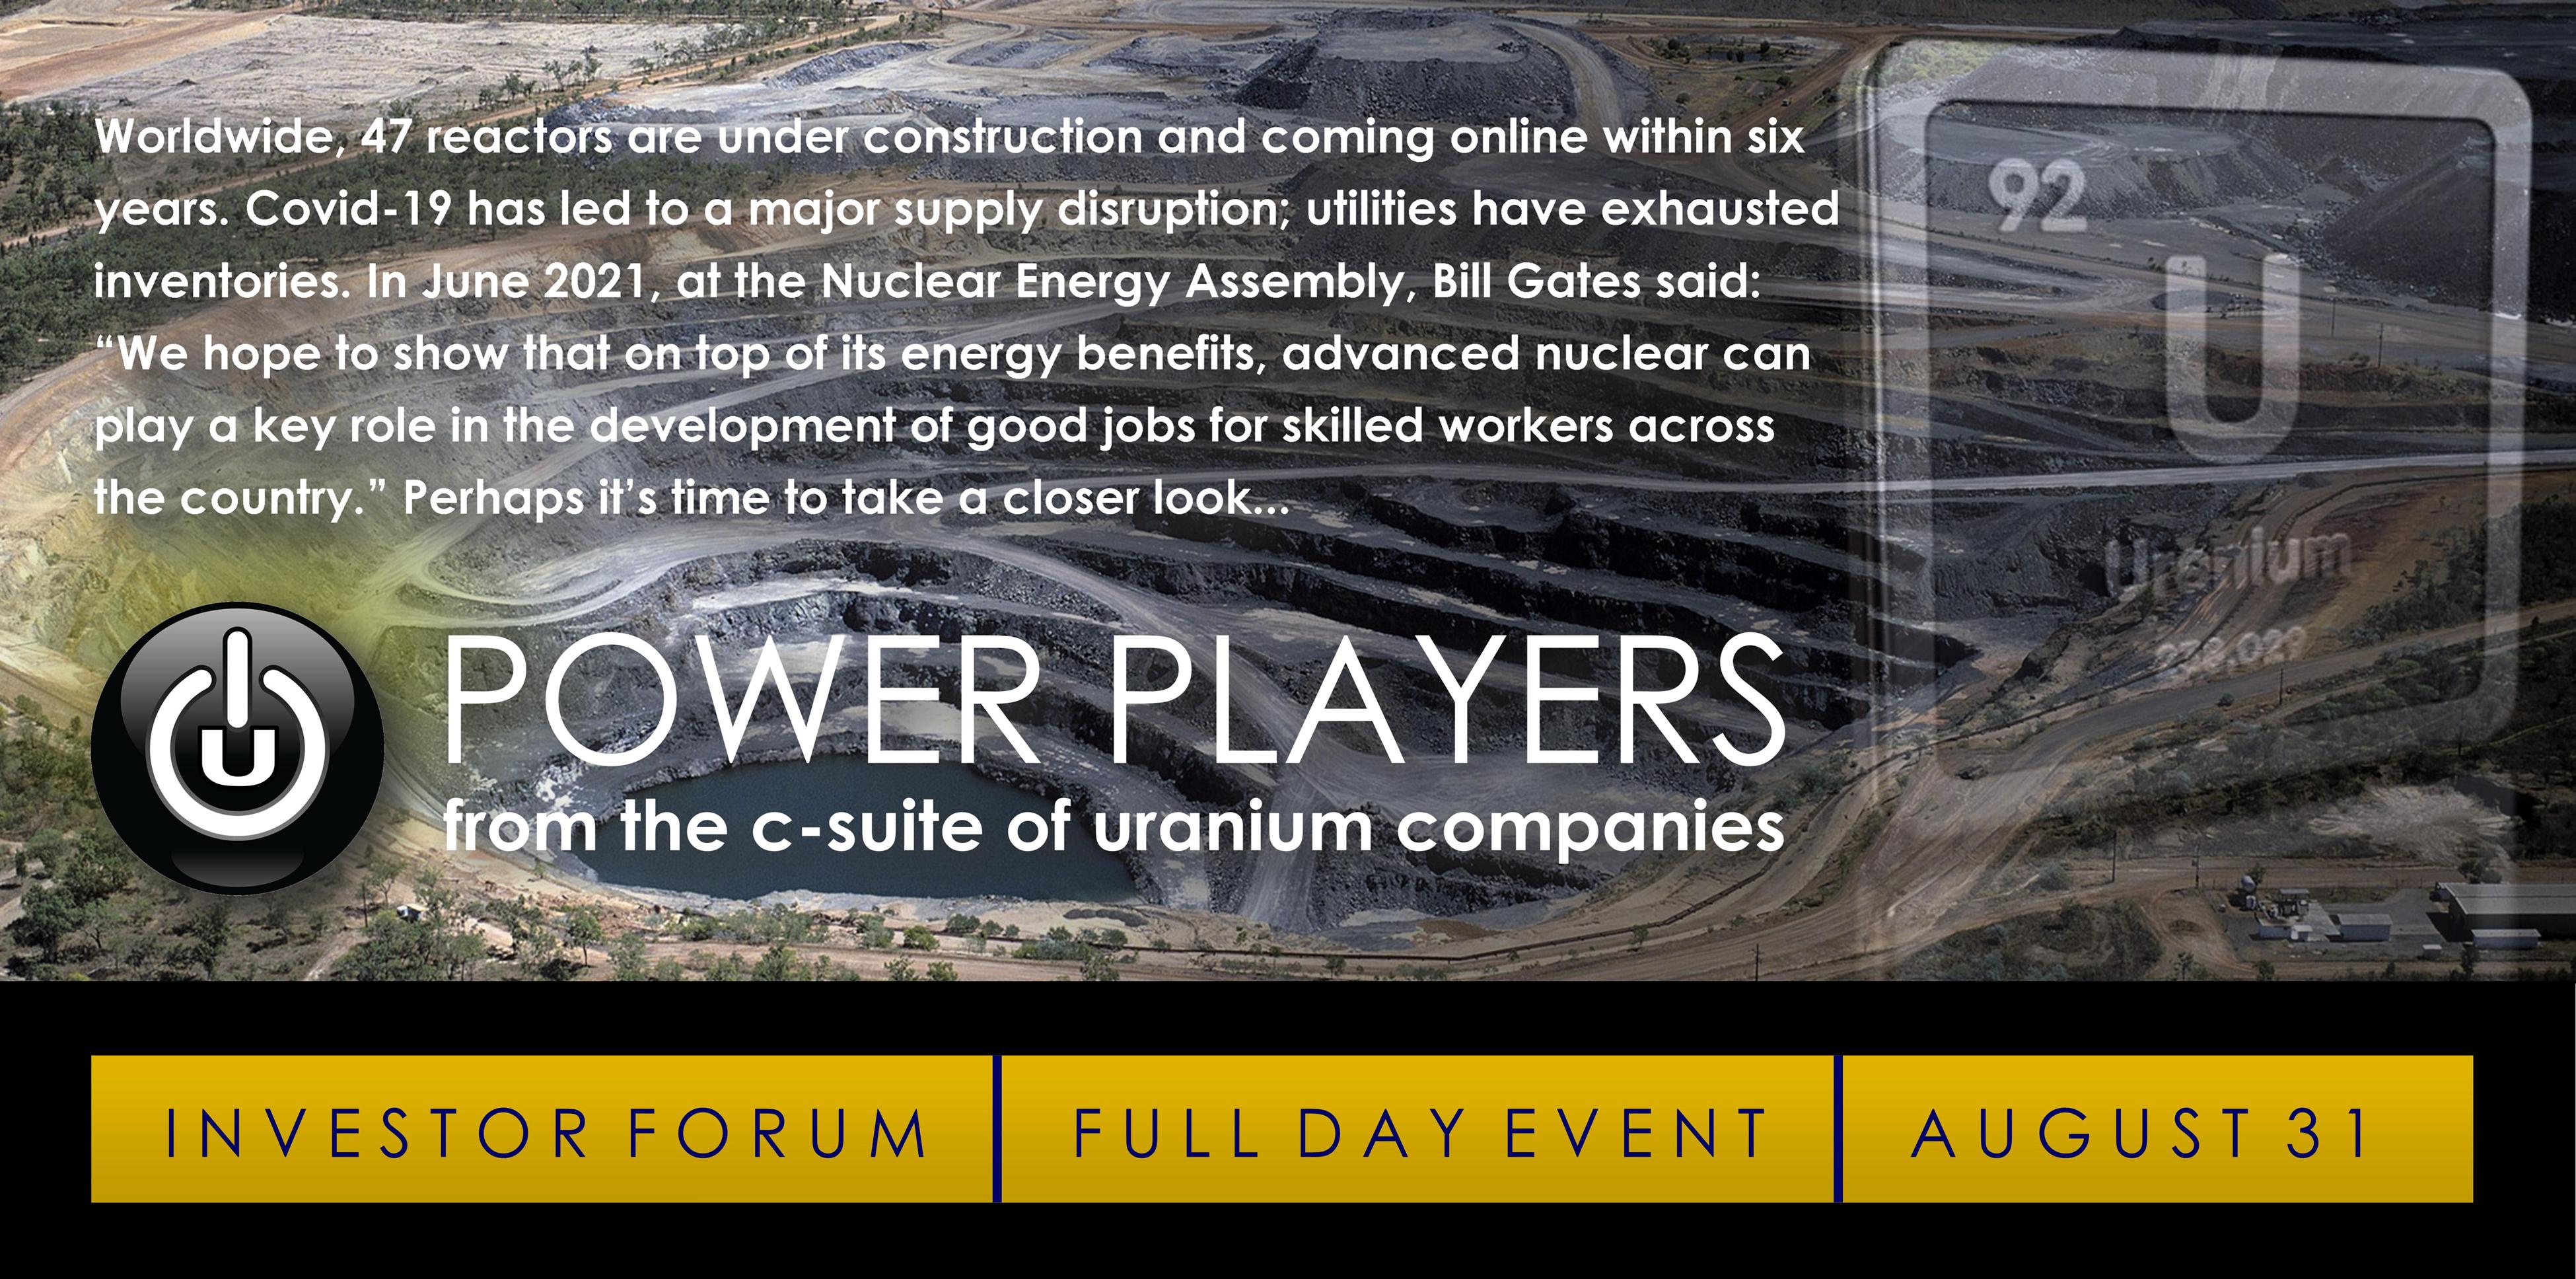 Noble Capital Markets Uranium Power Players Investor Forum Presenting Companies